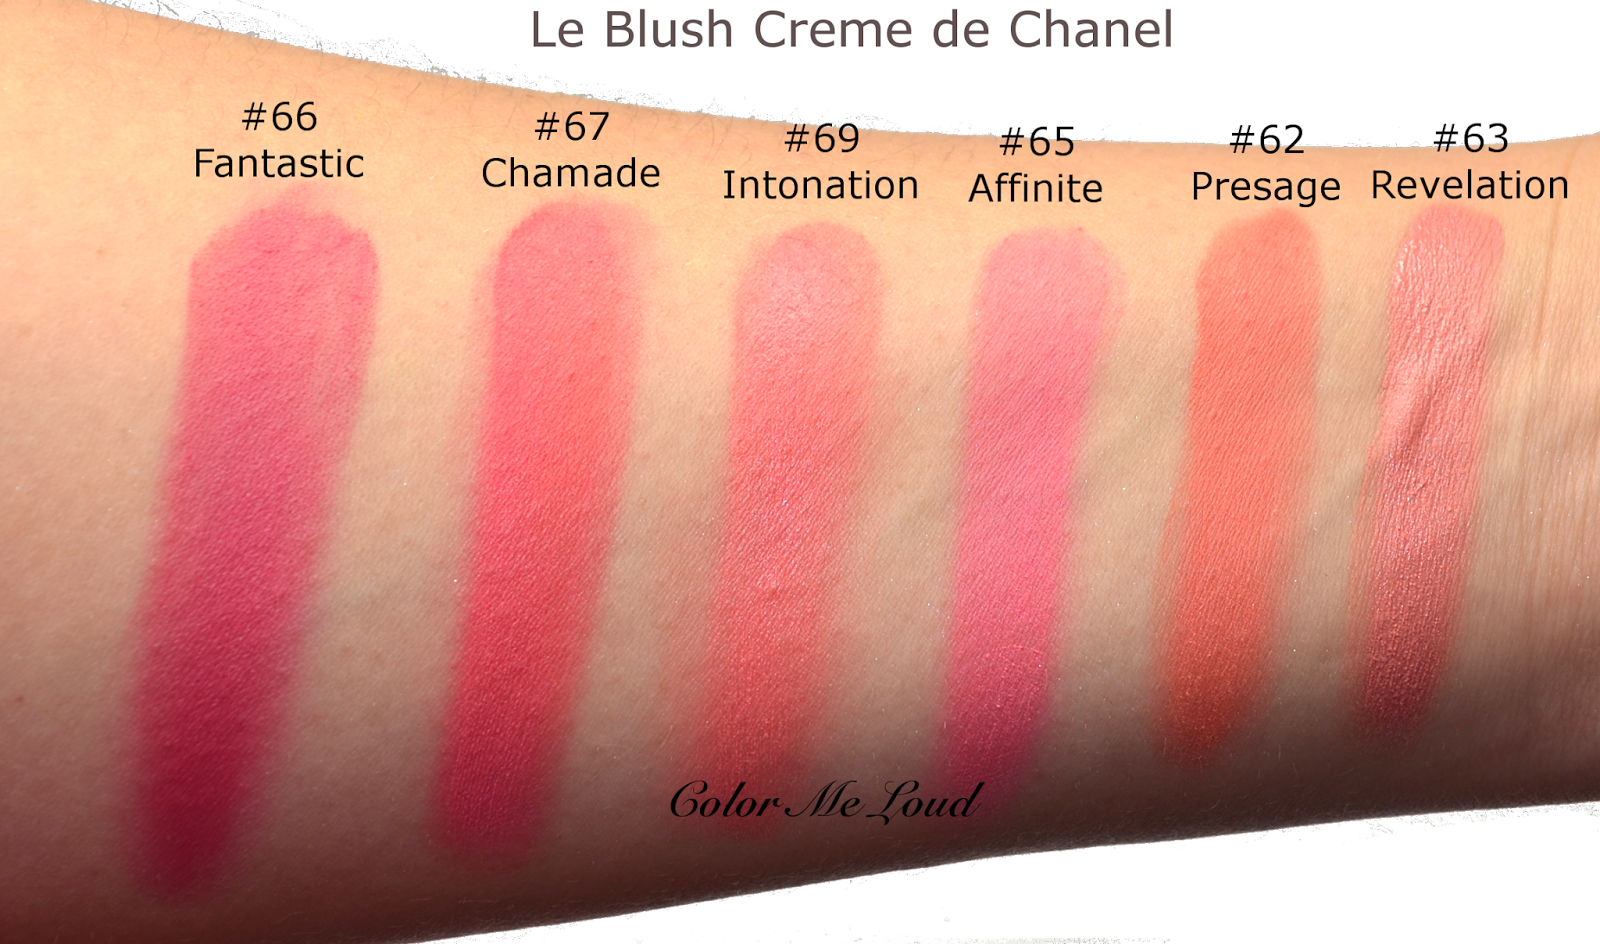 Chanel 67 CHAMADE Le Blush Creme de Chanel Swatches, Review & FOTD – Notes  de Printemps Spring 2014 - Blushing Noir